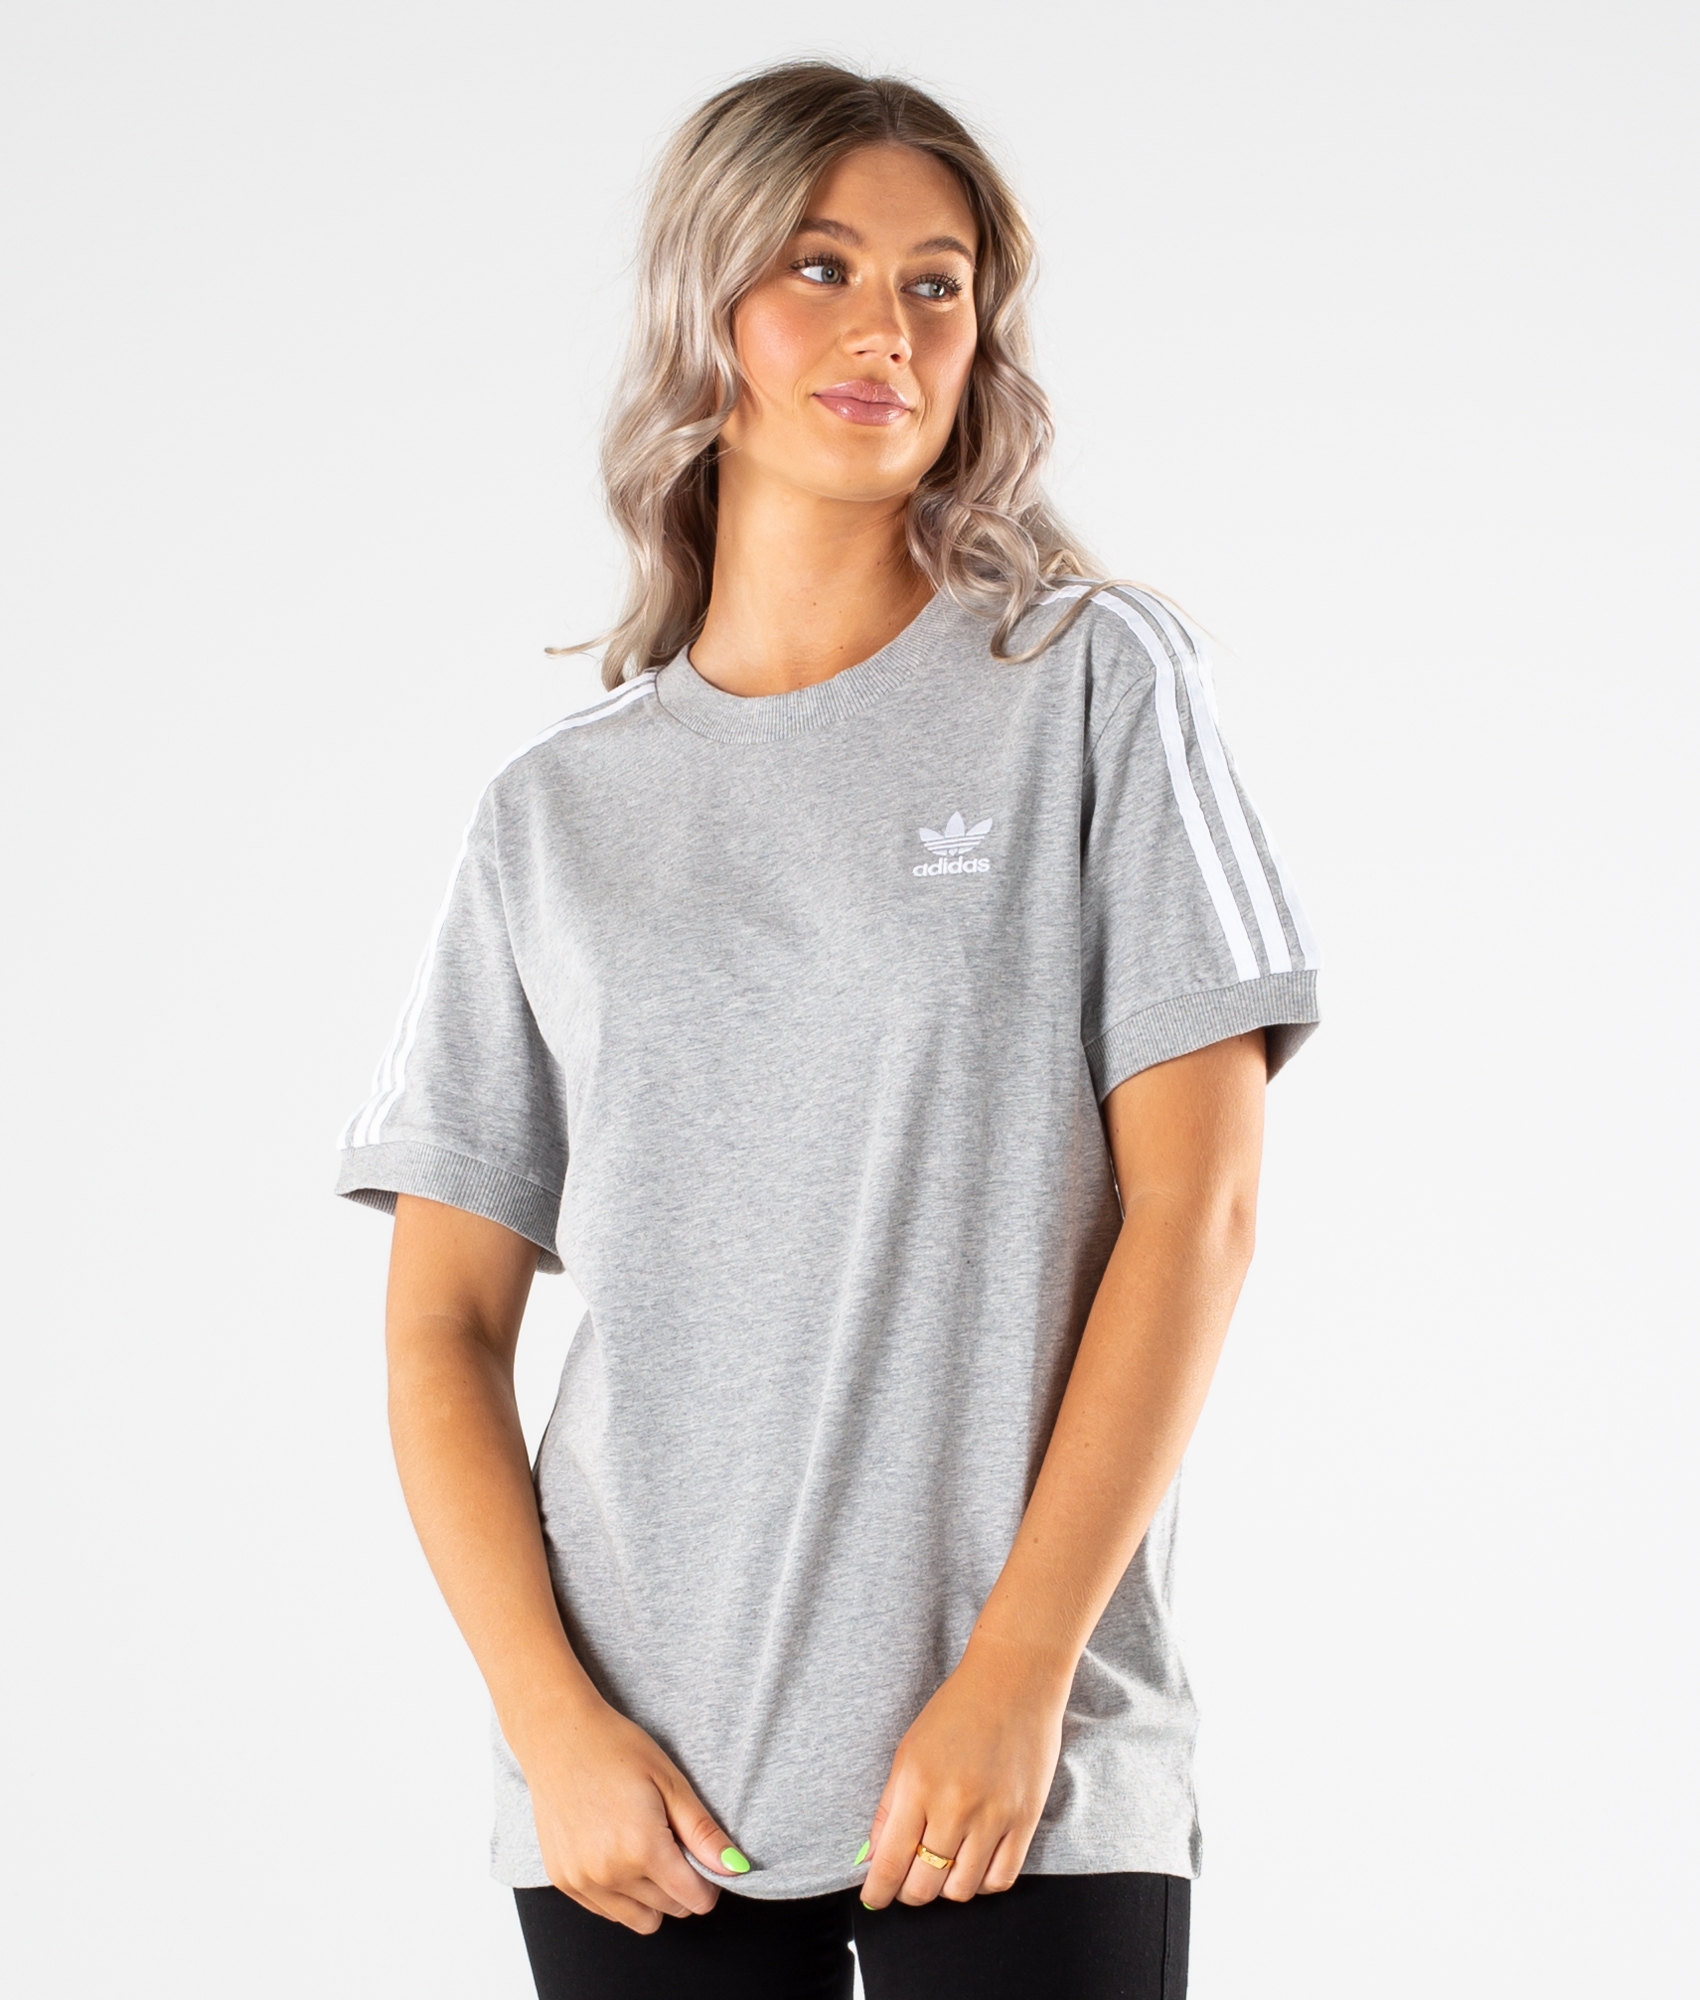 grey adidas shirt womens